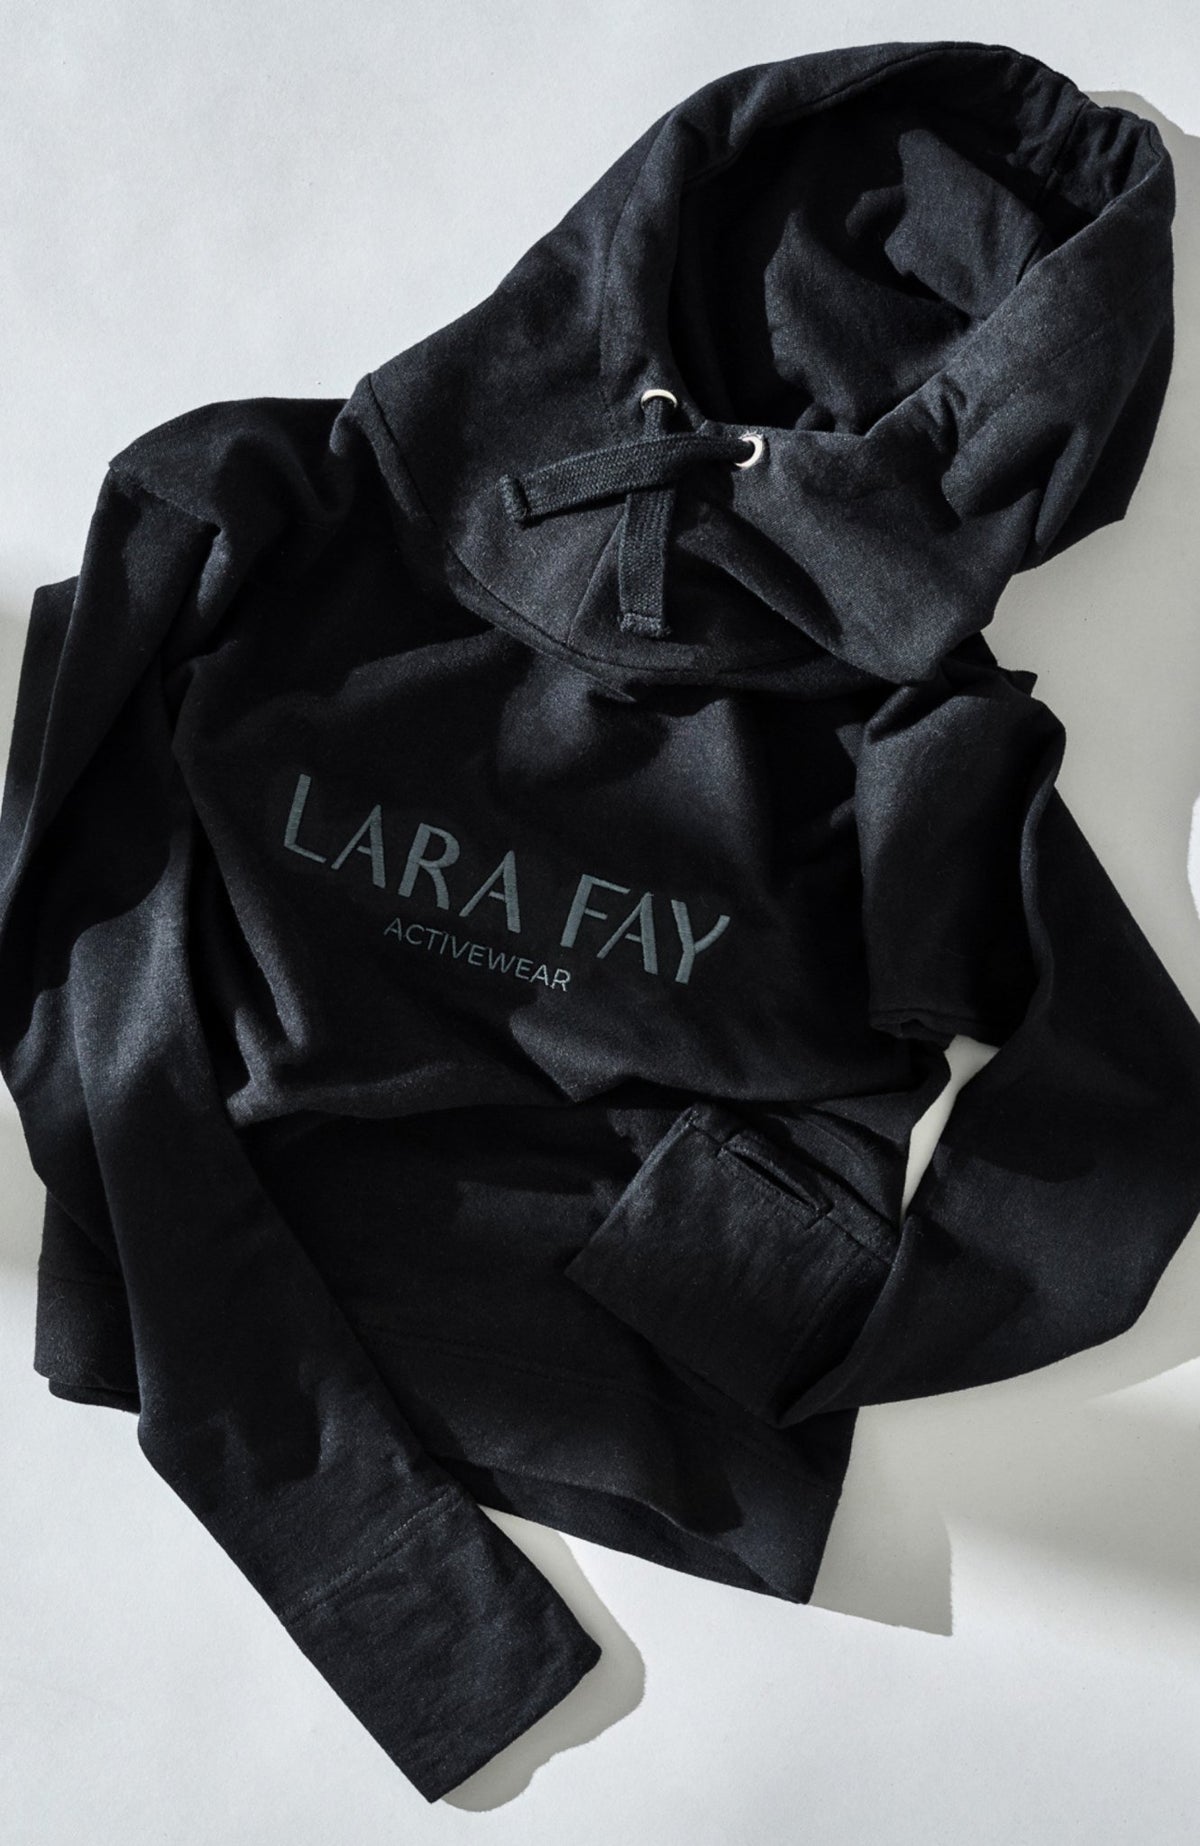 Black Harmonize Cotton Fleece Hoody - Lara Fay Activewear